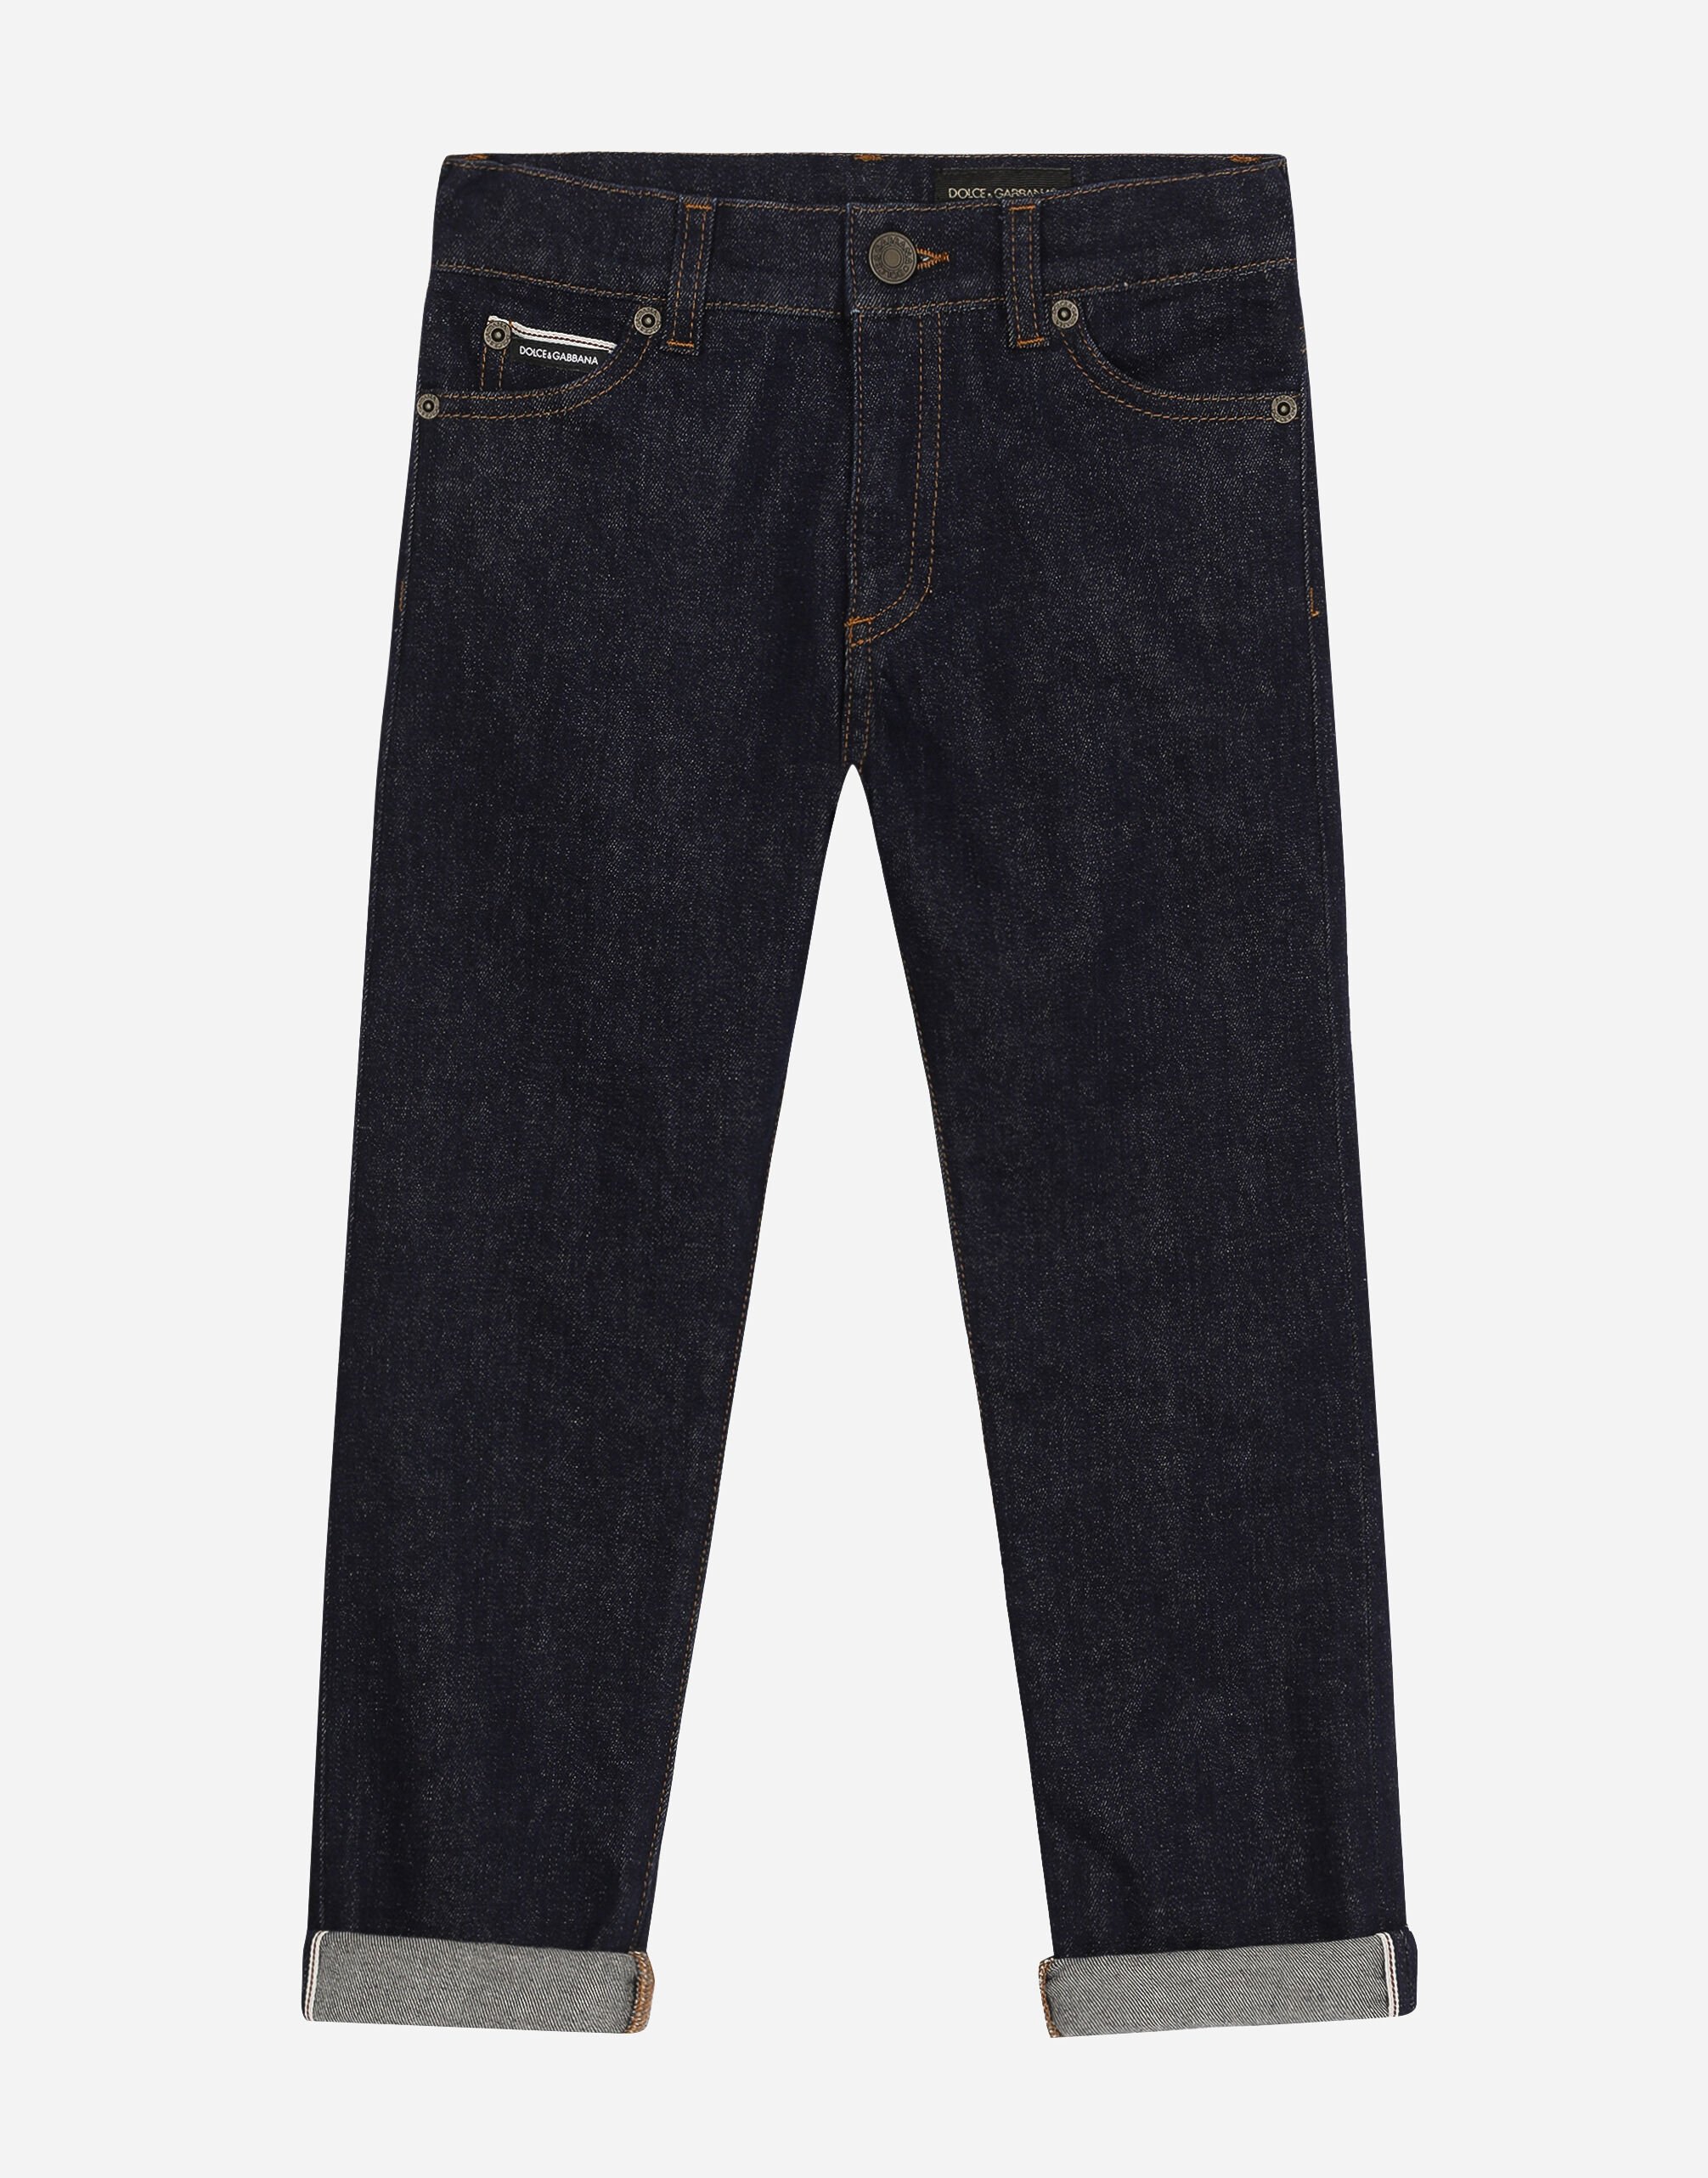 ${brand} 5-pocket stretch denim jeans with logo tag ${colorDescription} ${masterID}